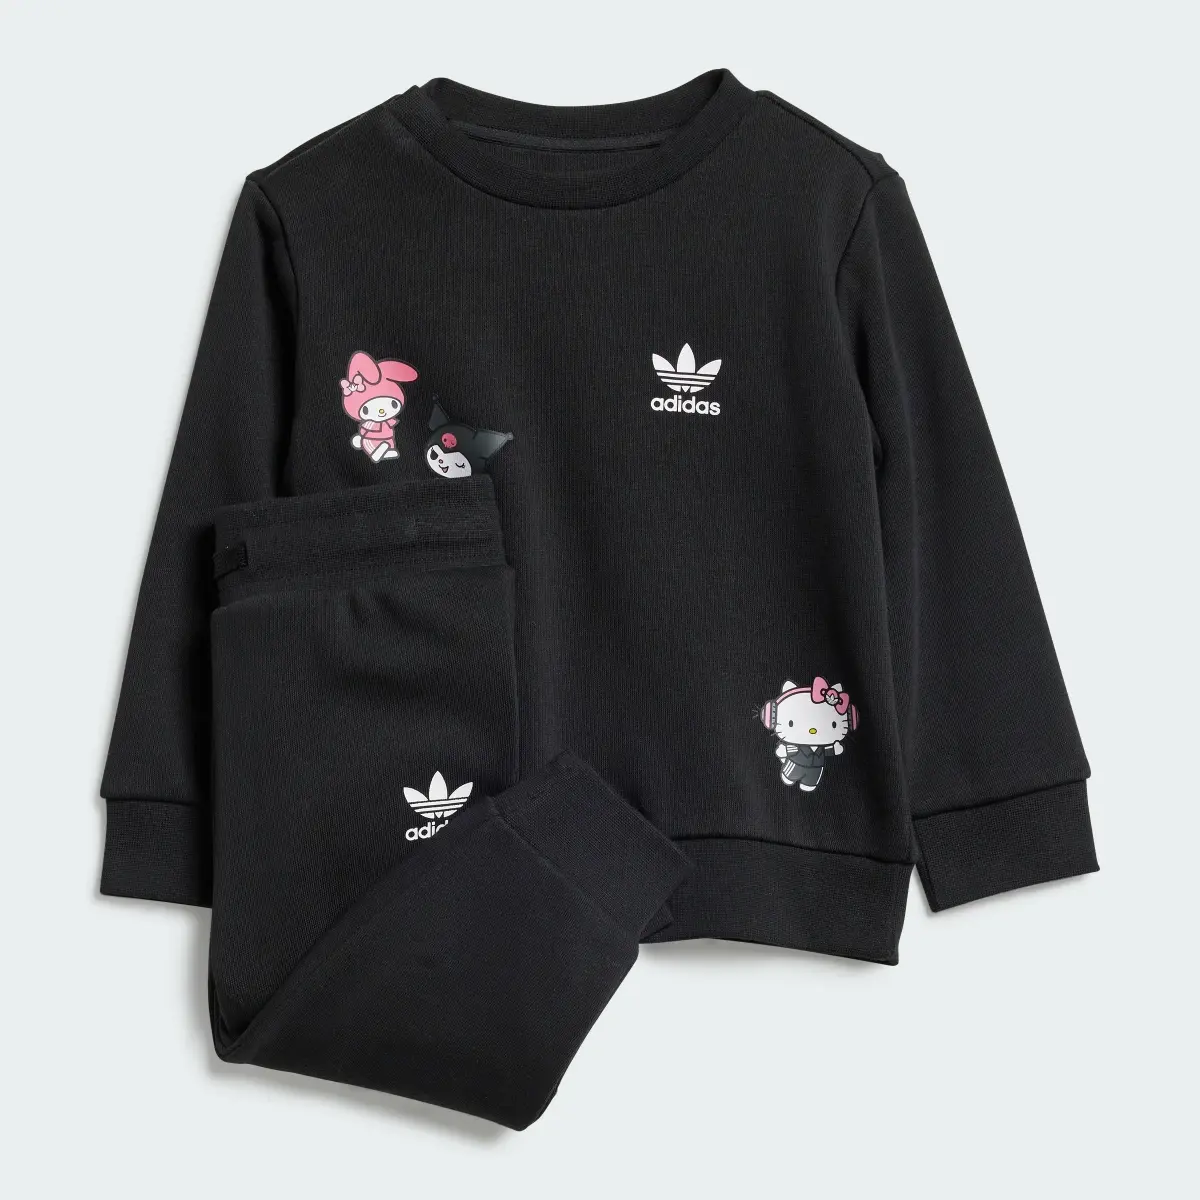 Adidas Originals x Hello Kitty Crew Set. 2